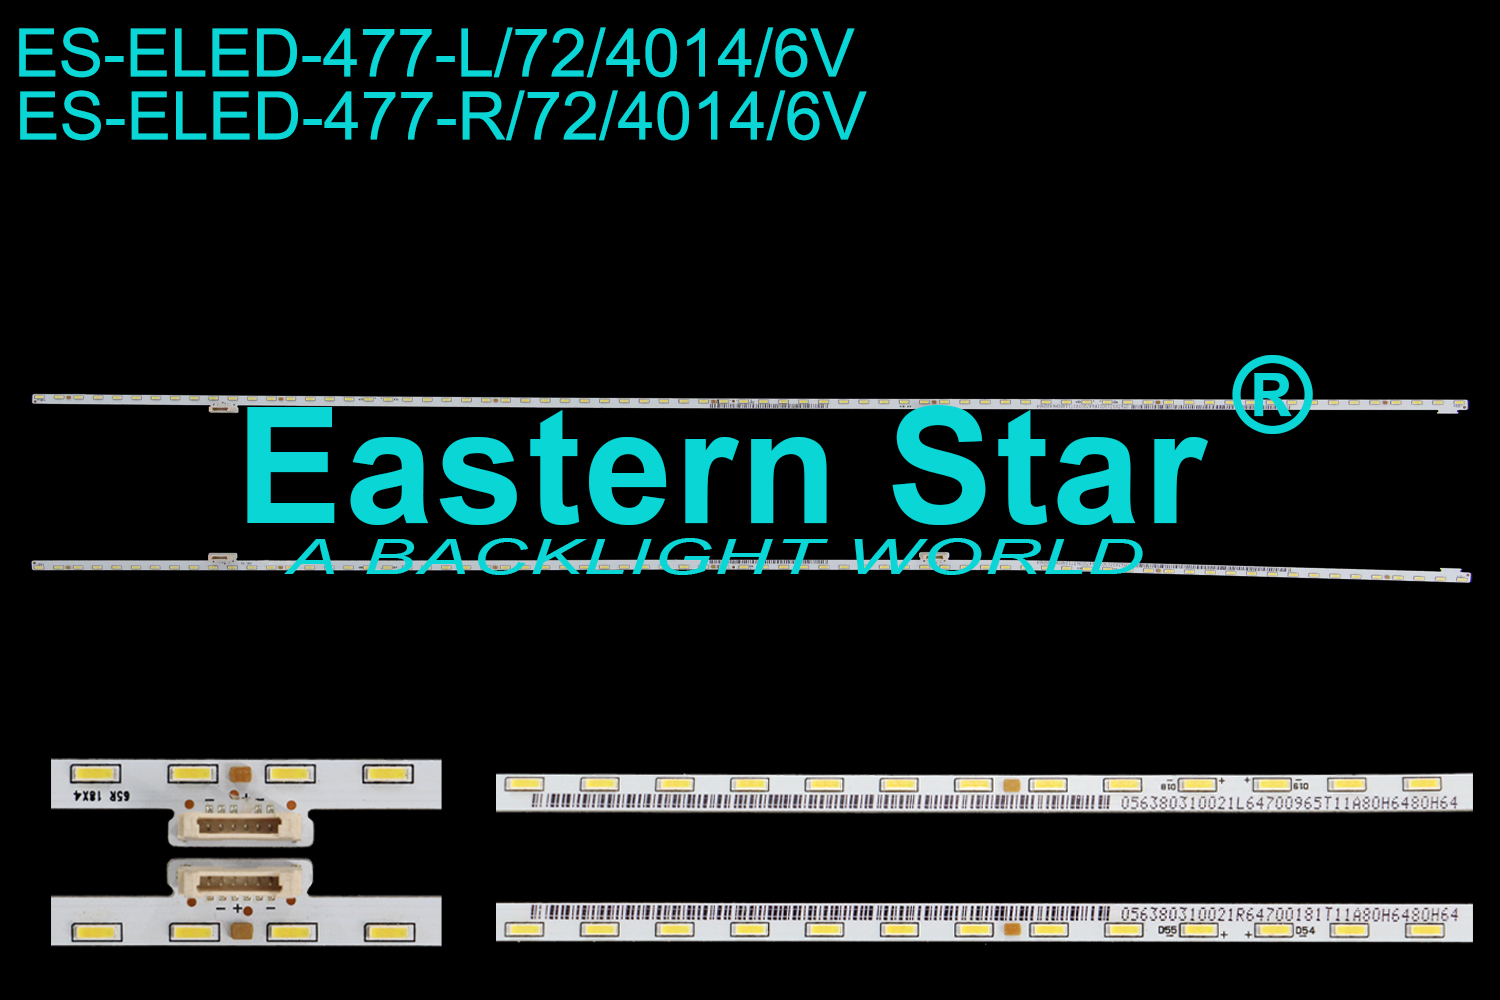 ES-ELED-477 ELED/EDGE TV backlight use for 65'' Sony XBR-65X850D 65R 18X4  056380310021R64700181T11A80H6480H64   /    65L 18X4   056380310021T64700965T11A80H6480H64 LED STRIPS(2）